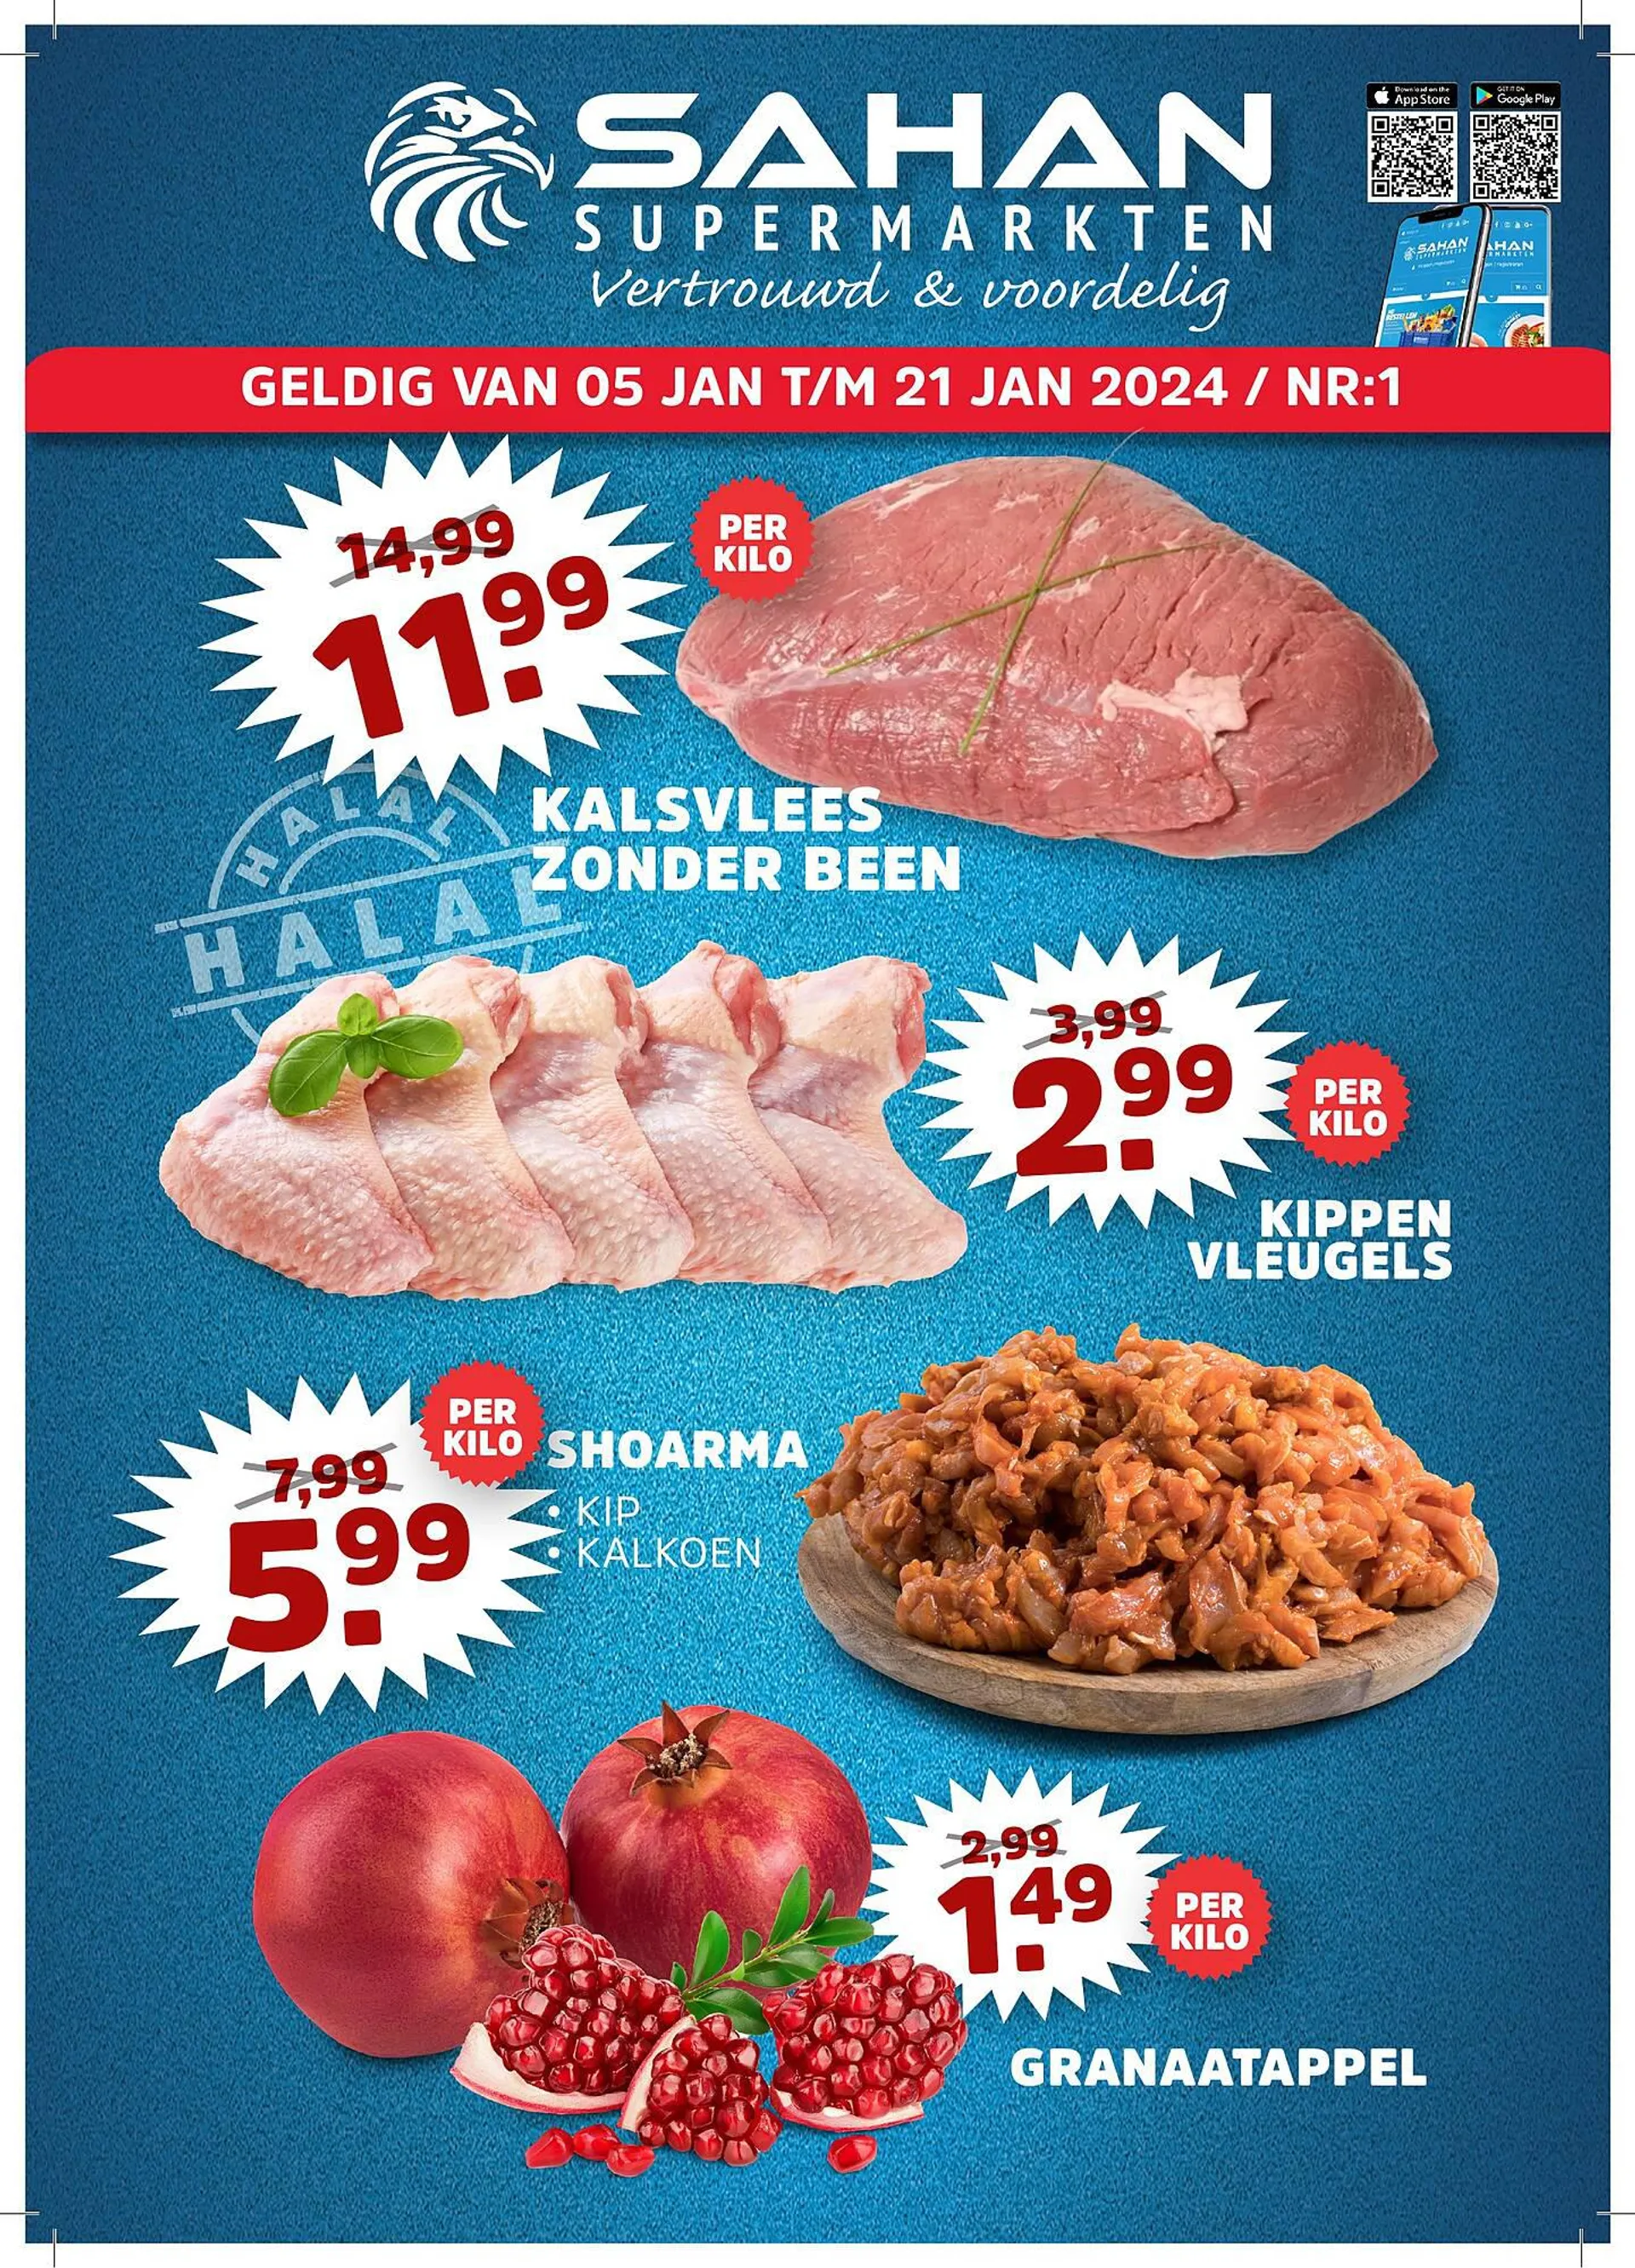 Sahan Supermarkten folder van 5 januari tot 21 januari 2024 - Folder pagina 1